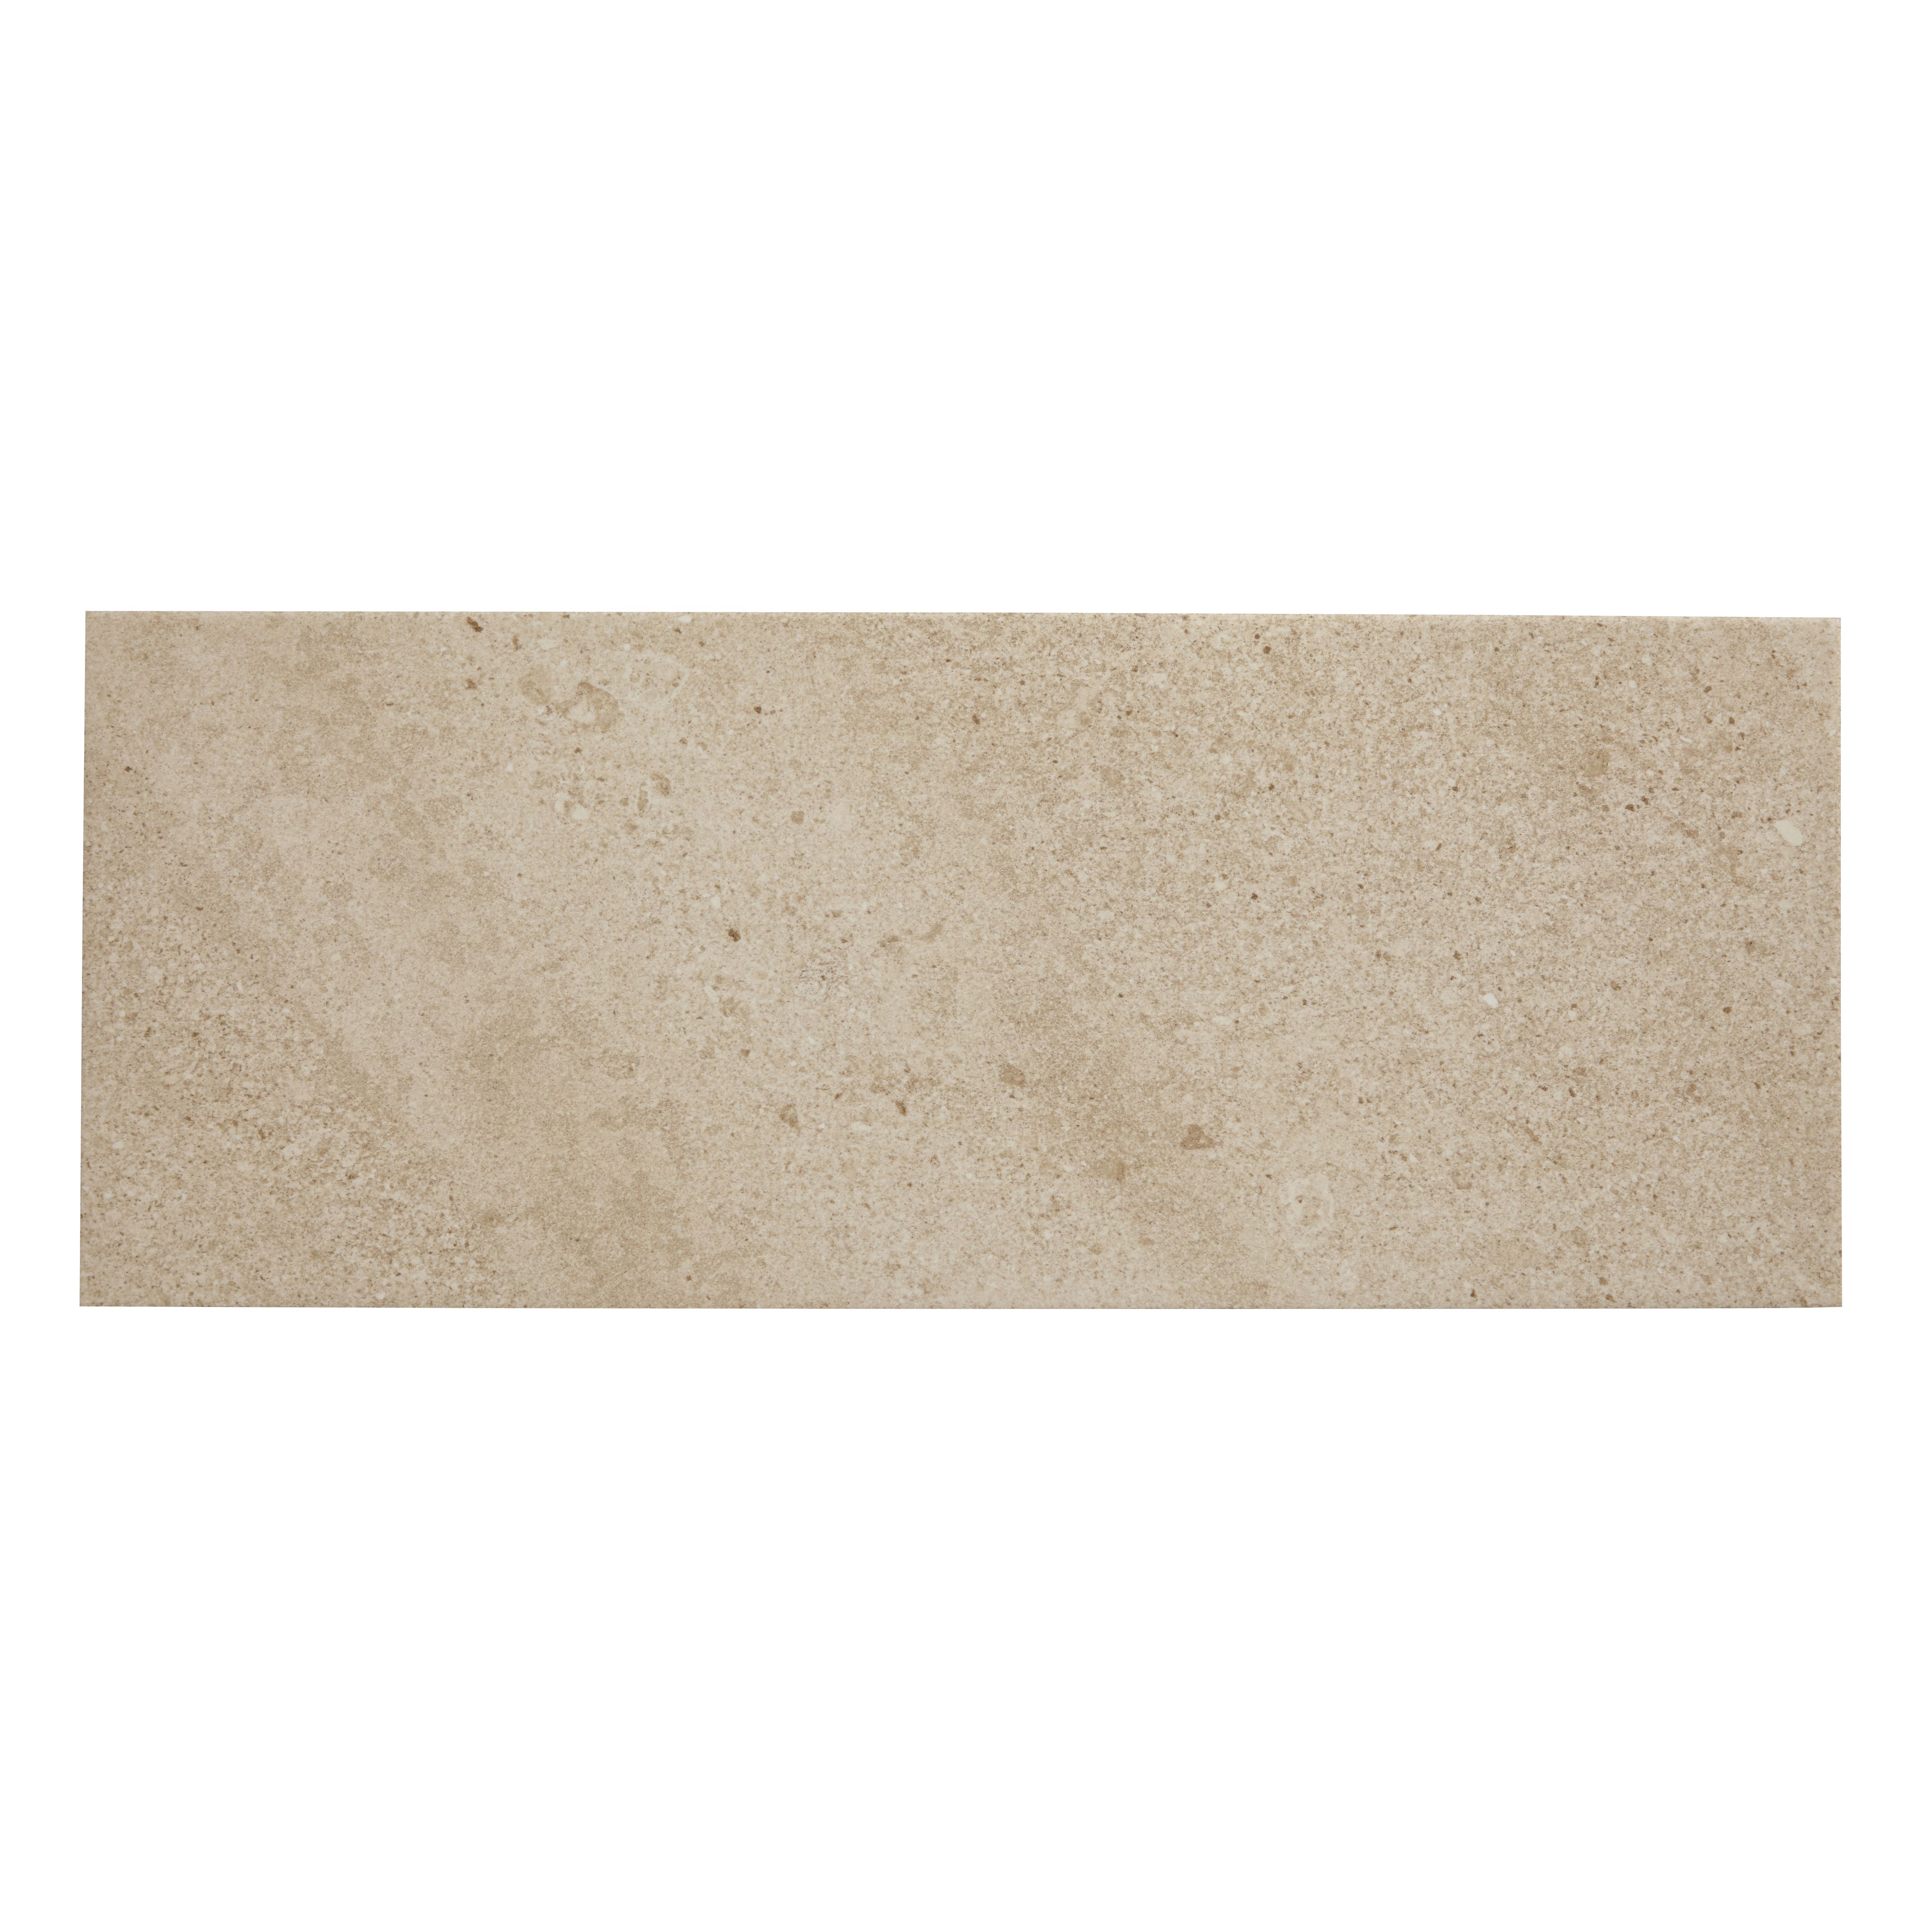 Milestone Beige Plain Ceramic Wall tile, 1, Sample